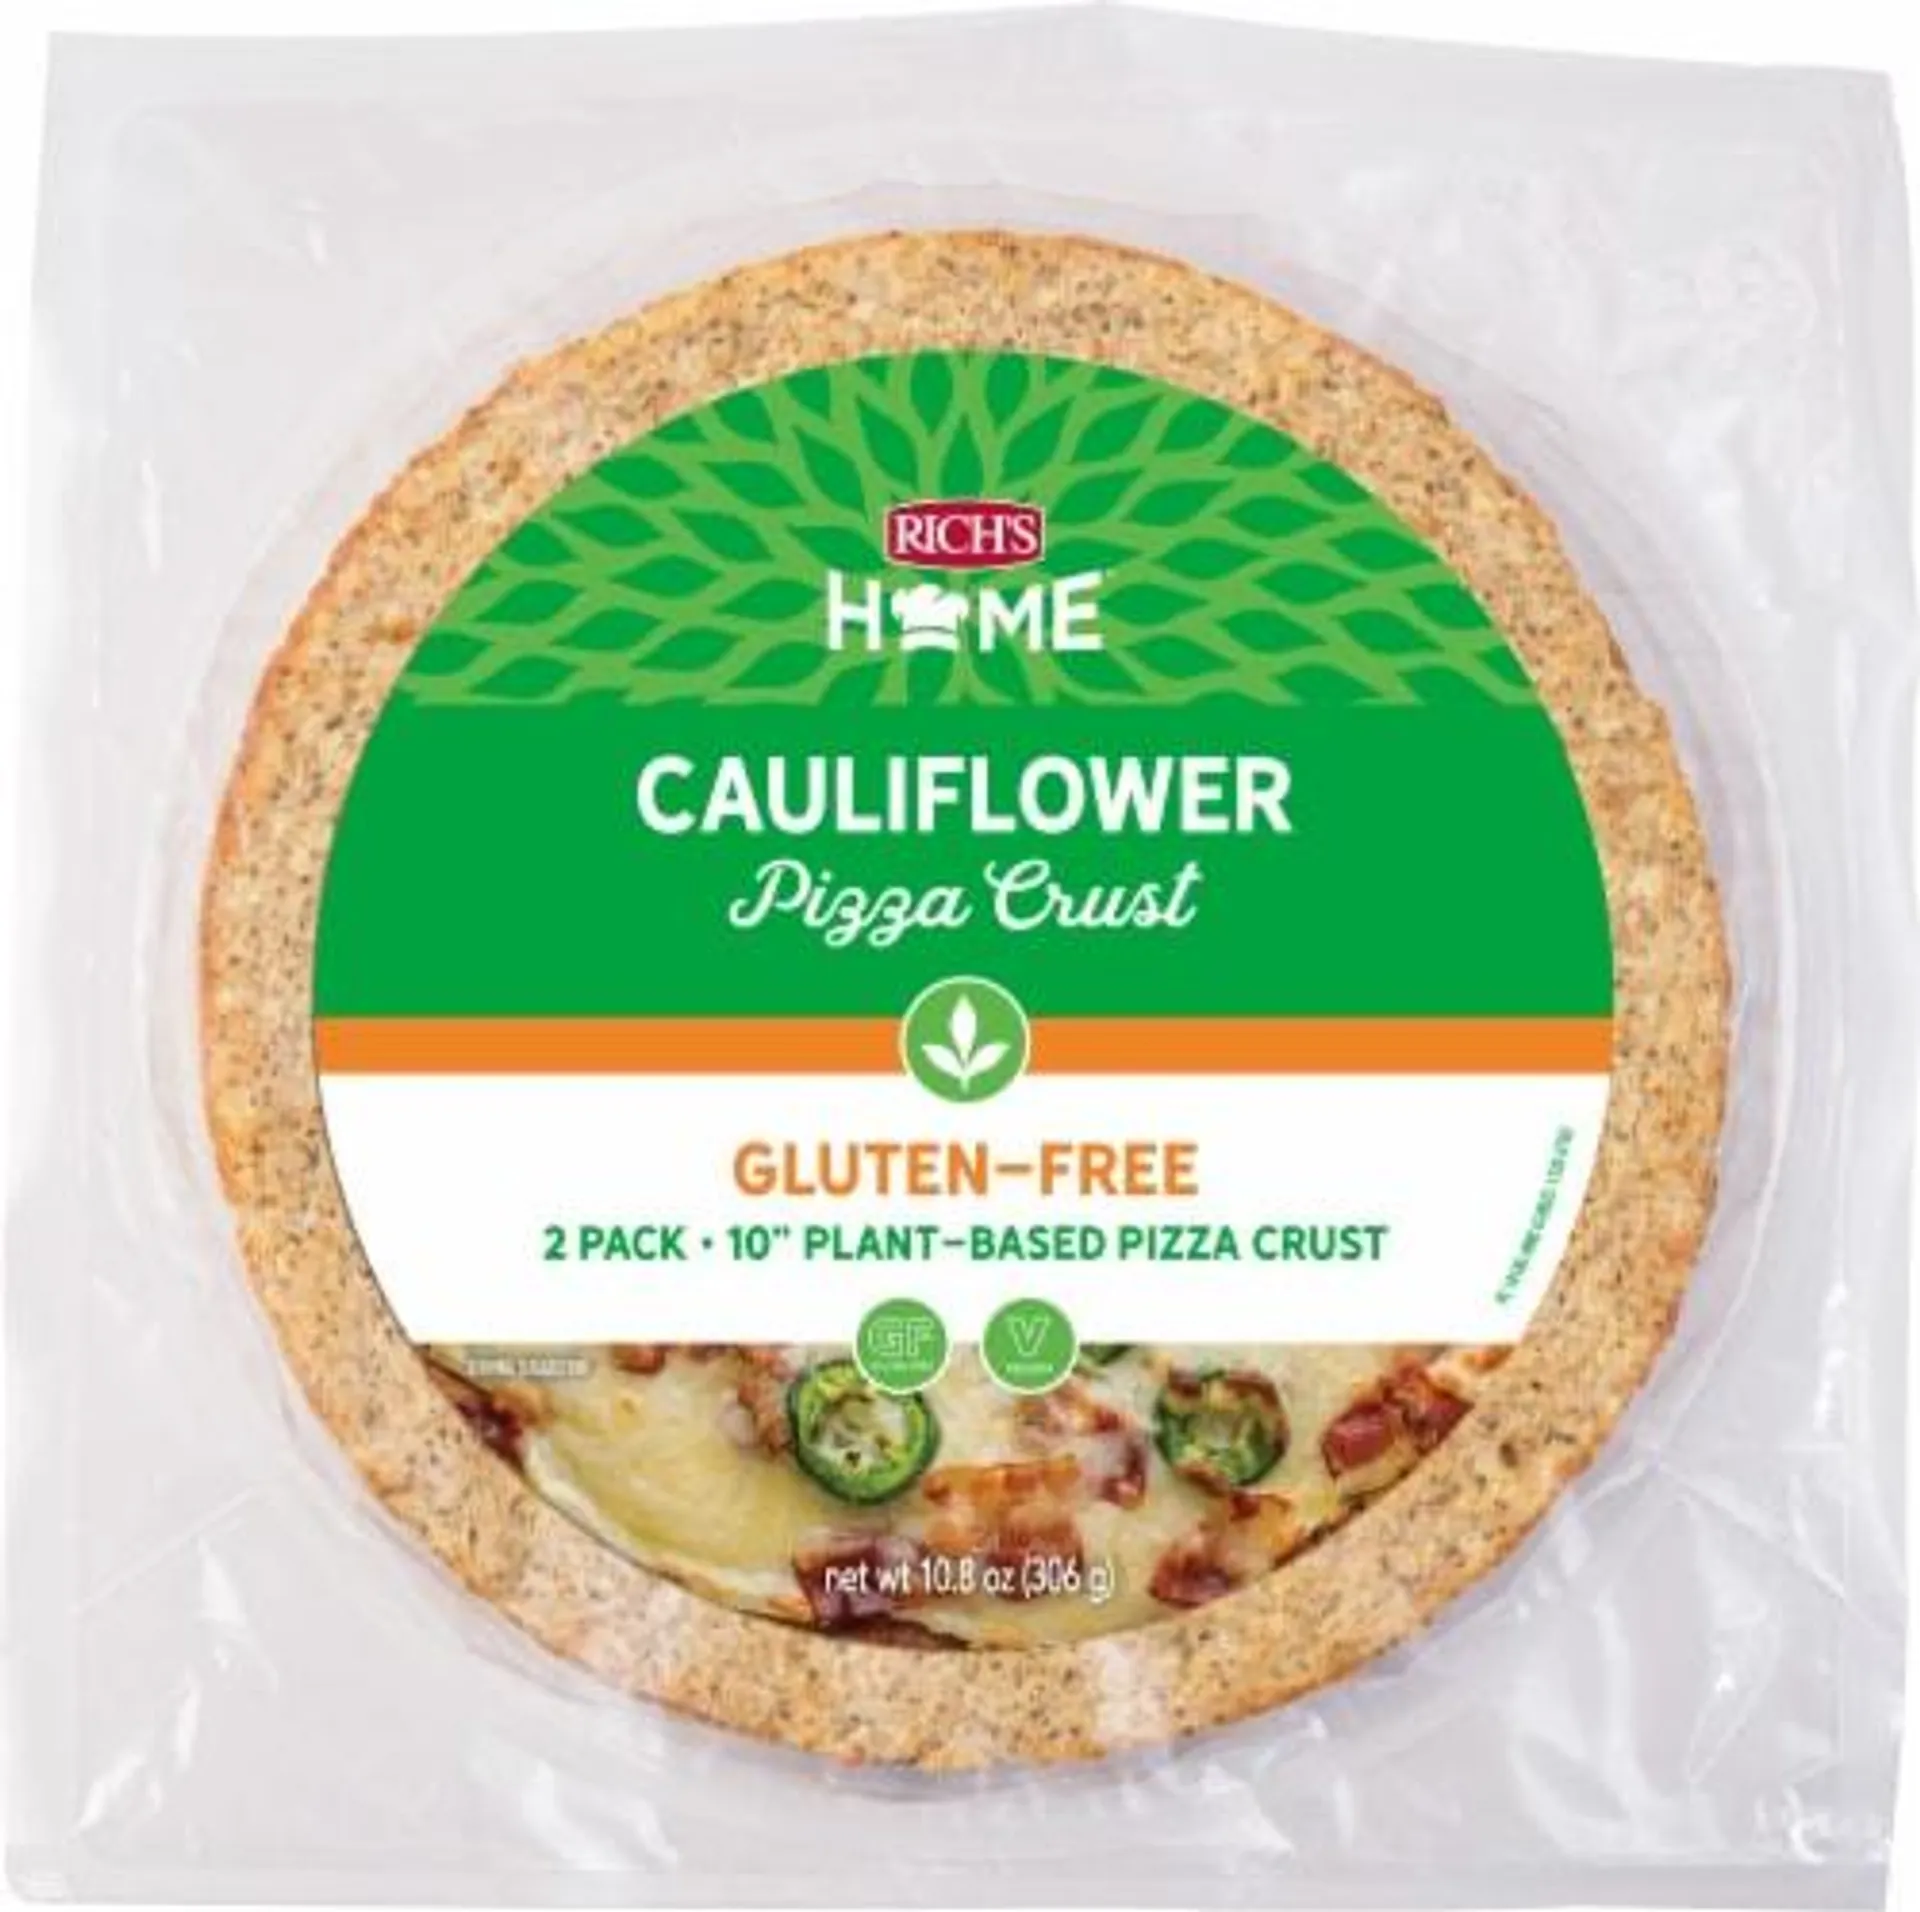 Rich's Home 10" Cauliflower Pizza Crust, Gluten-Free, Vegan, Pack of 6